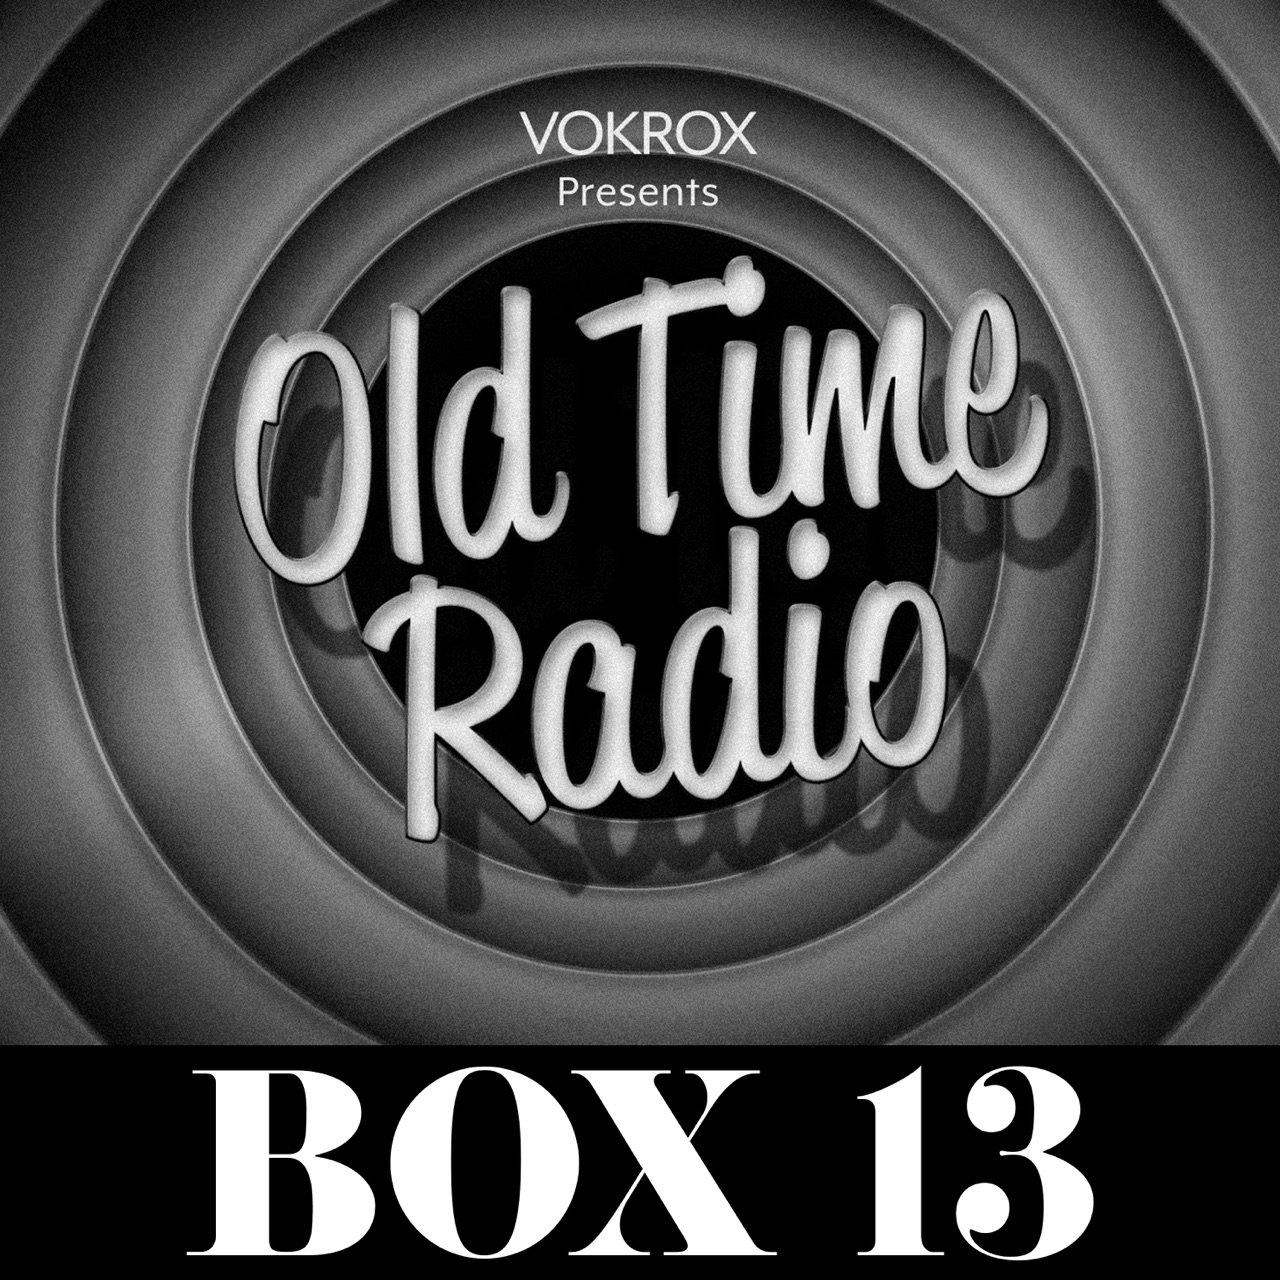 Box 13 old time radio